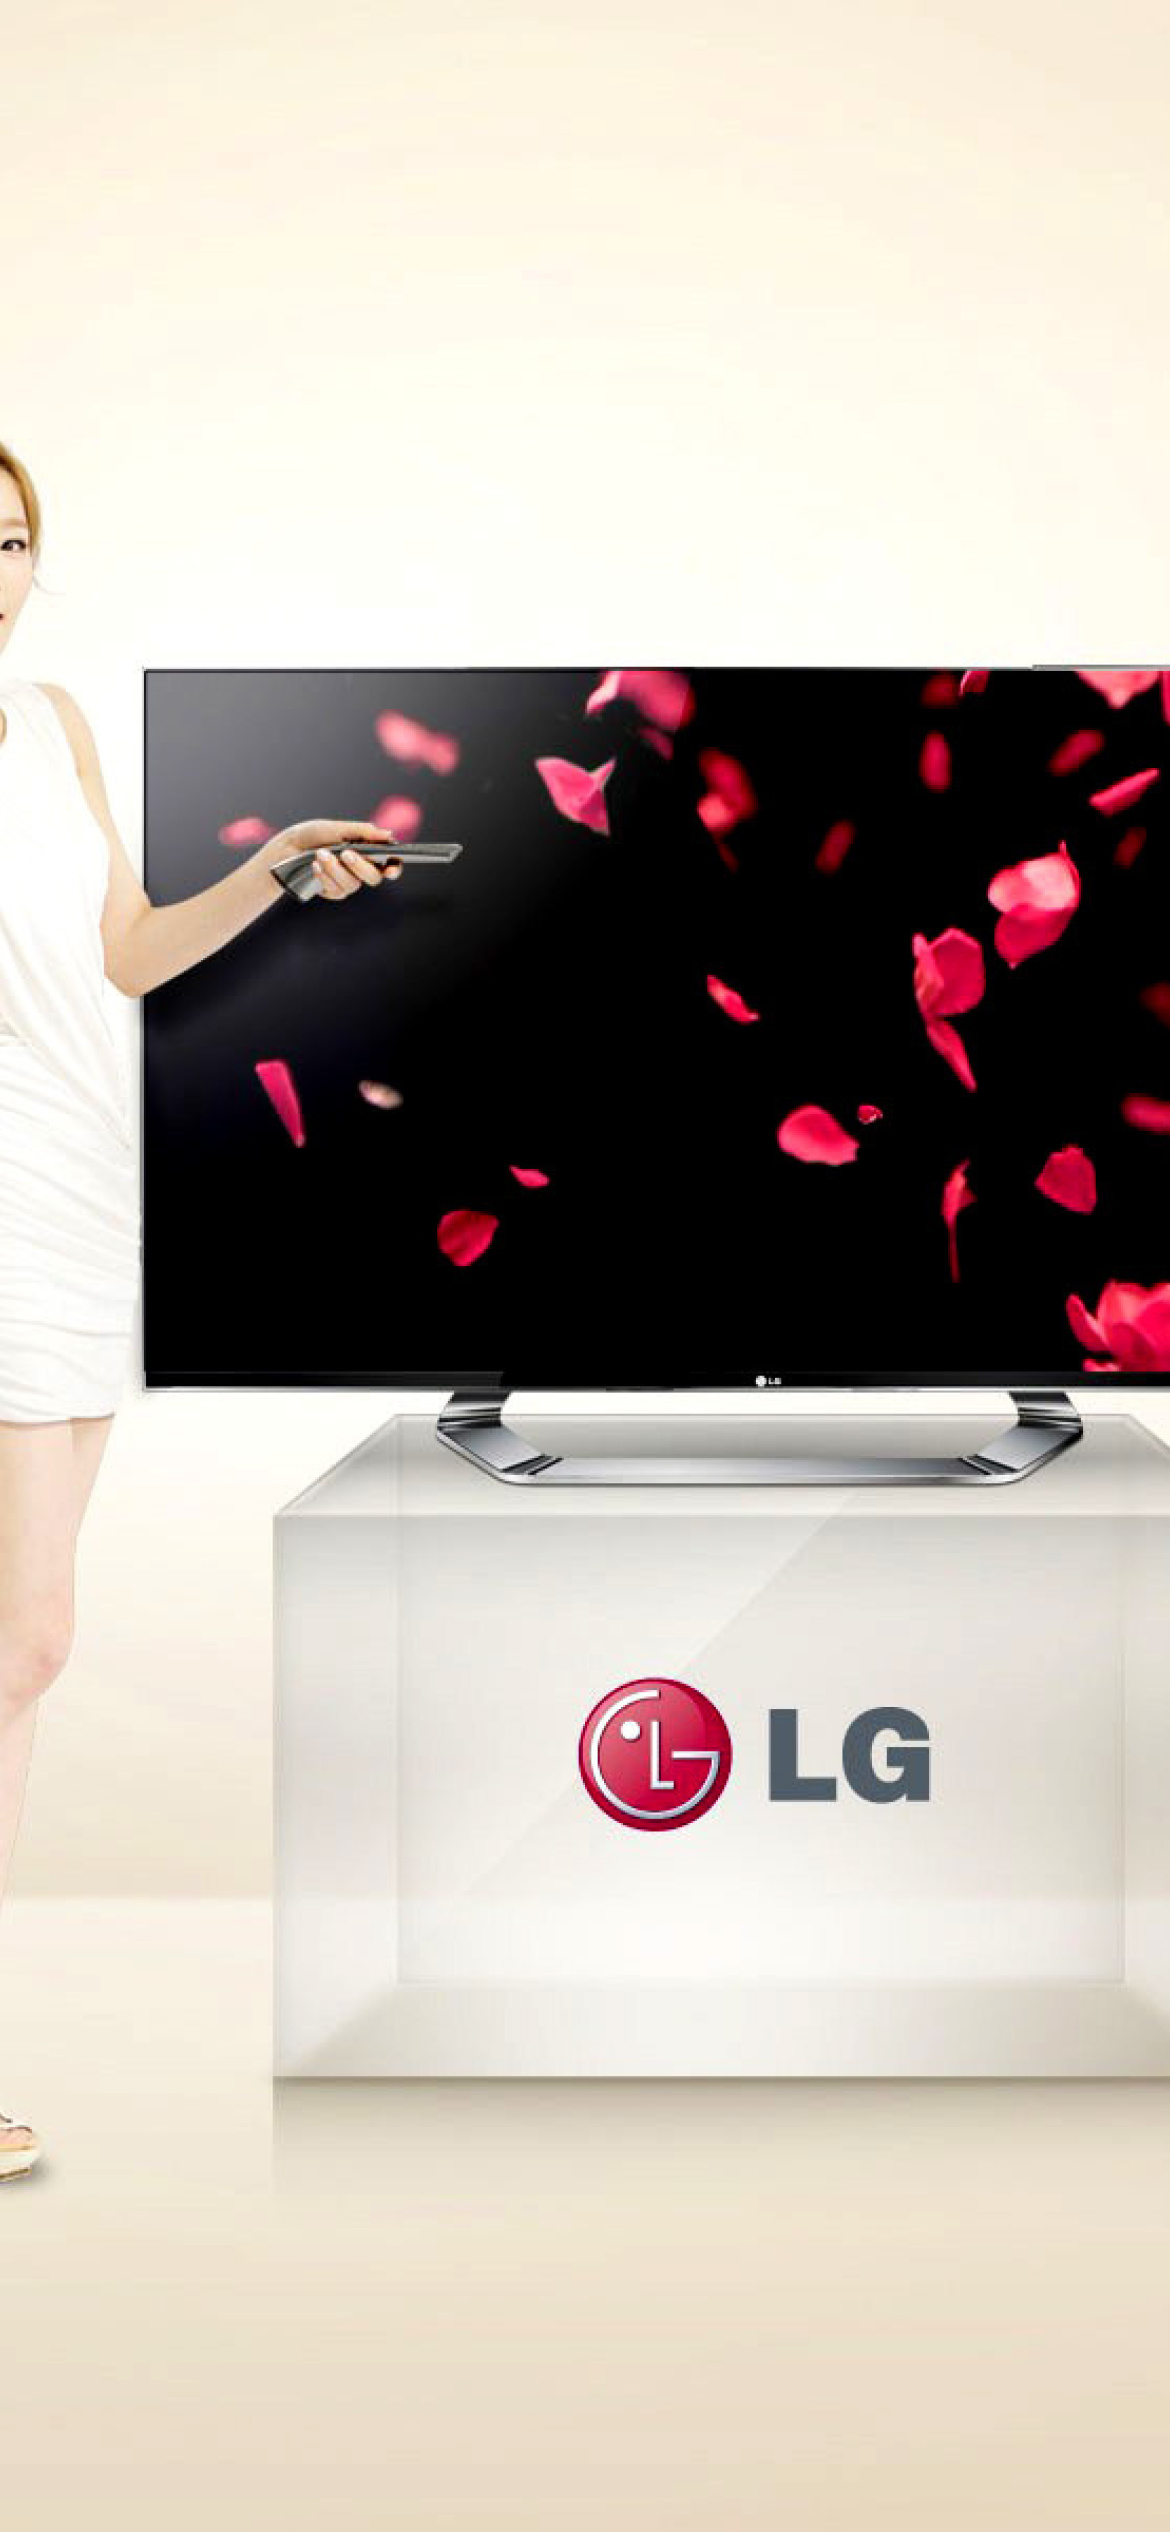 LG Smart TV wallpaper 1170x2532